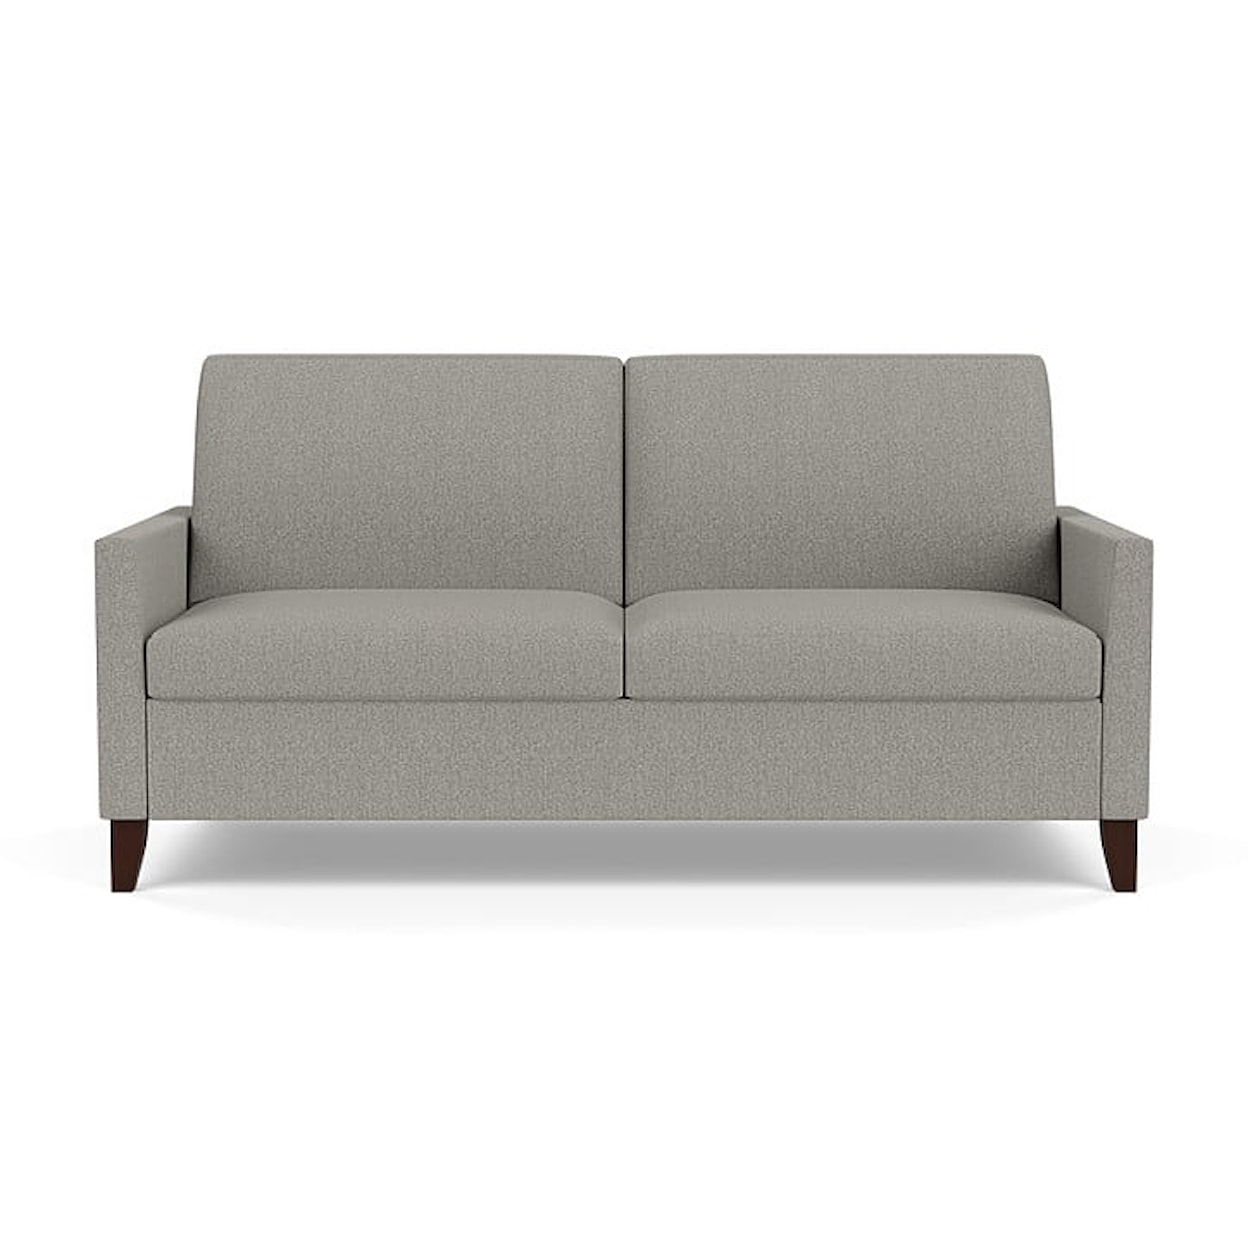 American Leather Harris Harris Comfort Sleeper Sofa